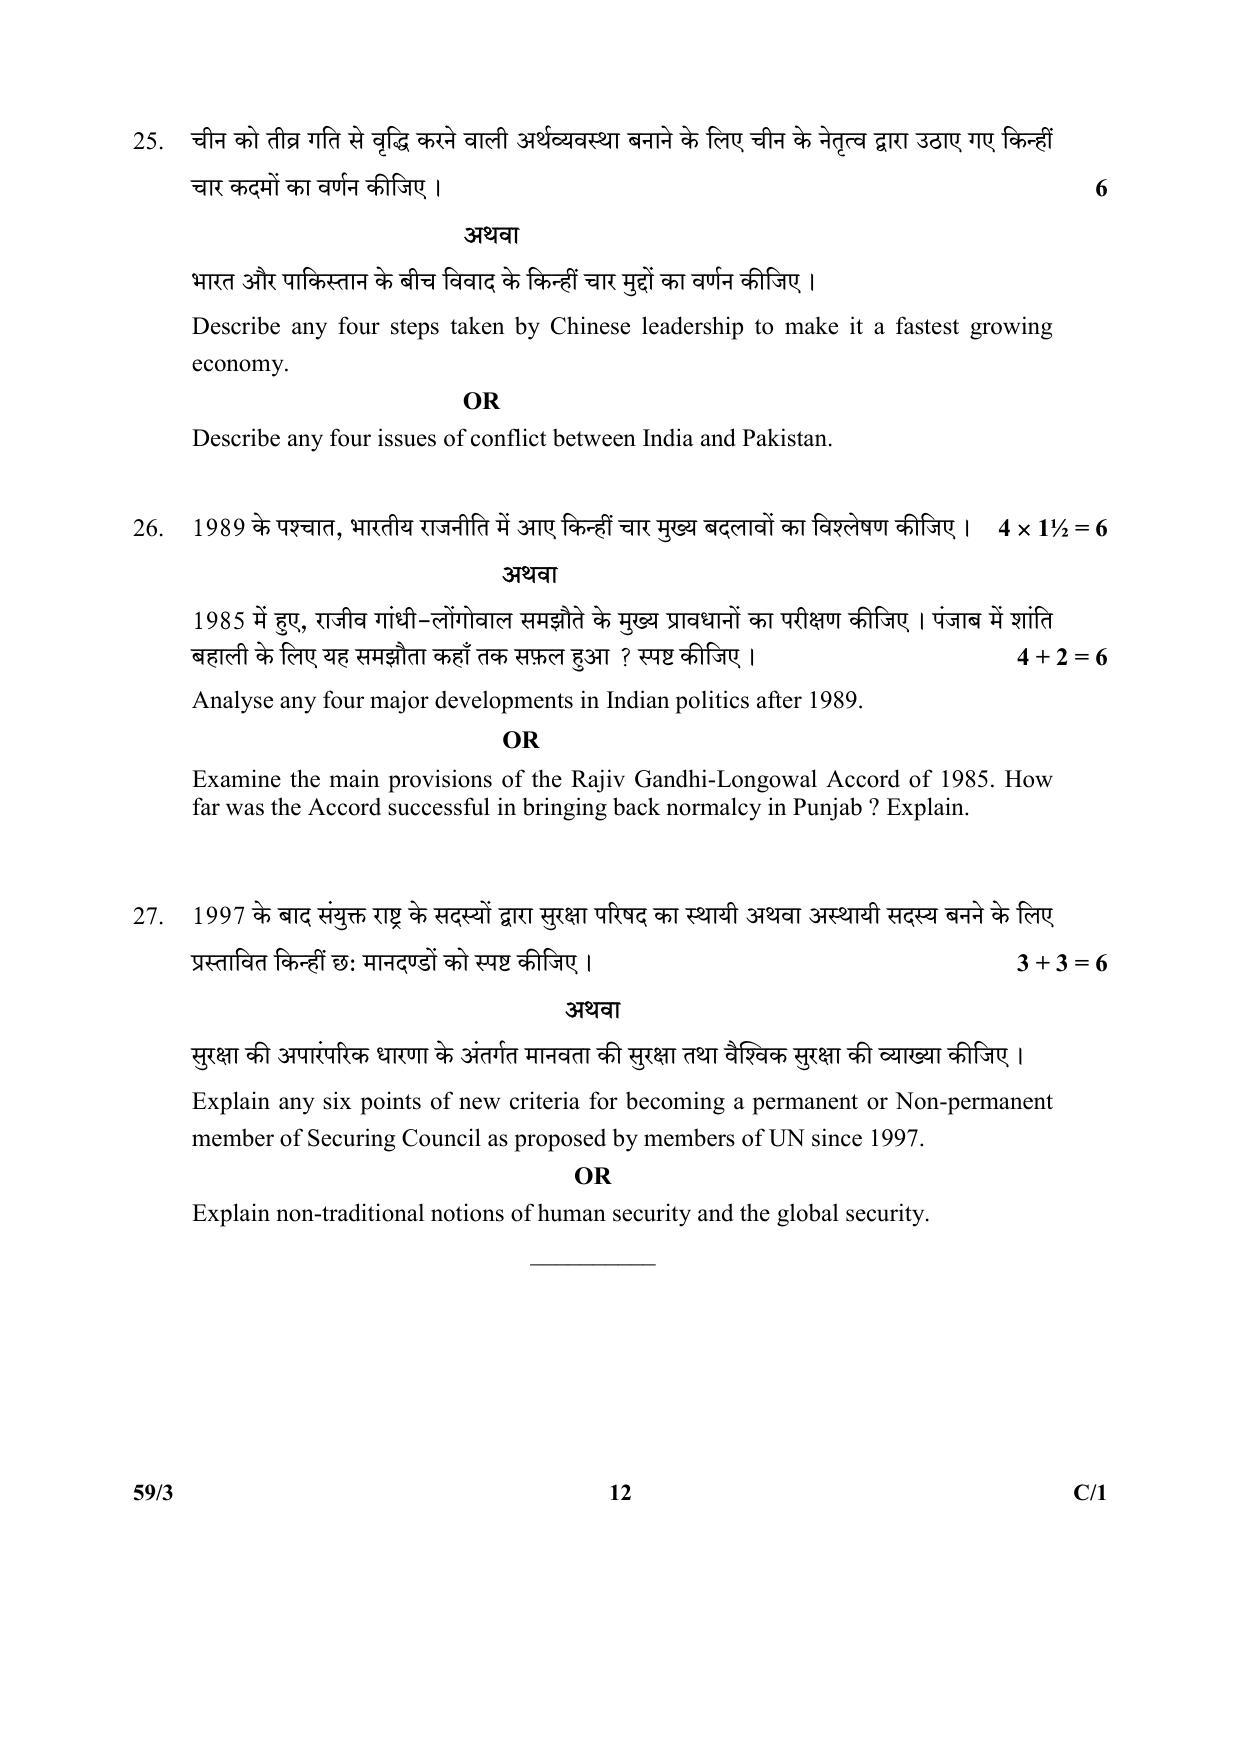 CBSE Class 12 221-3 Political Science_Punjabi 2018 Compartment Question Paper - Page 20